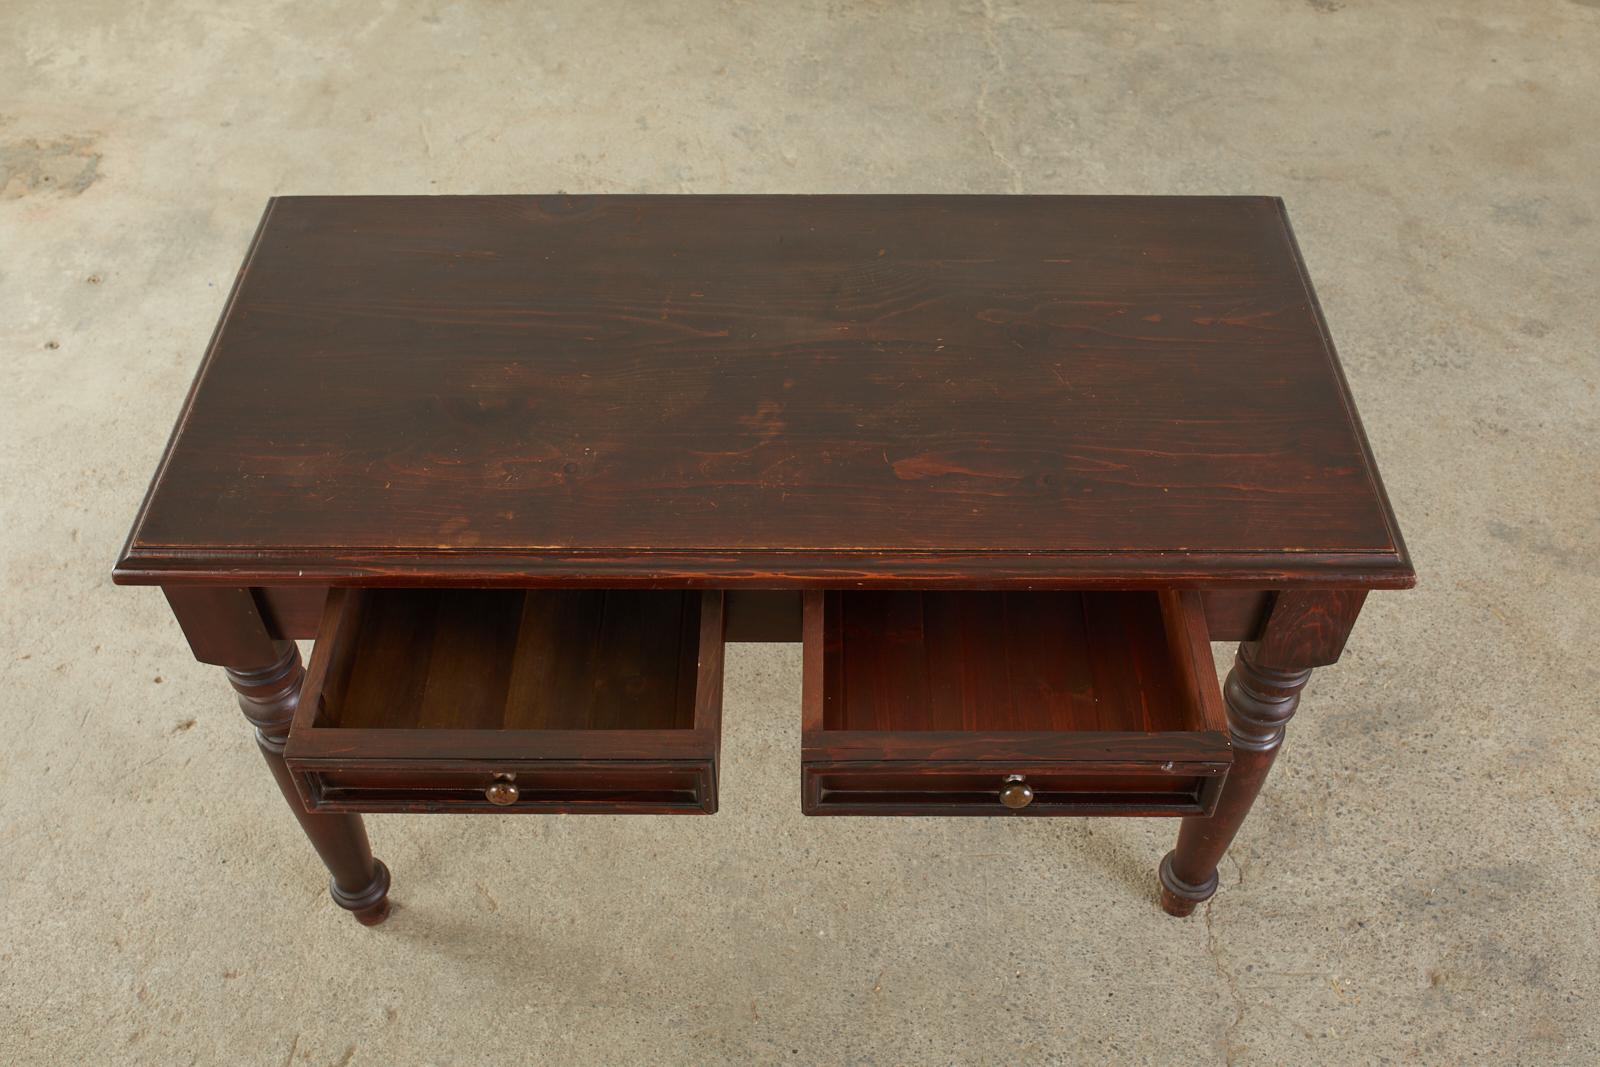 Hand-Crafted English Edwardian Style Turned Leg Pine Writing Table Desk